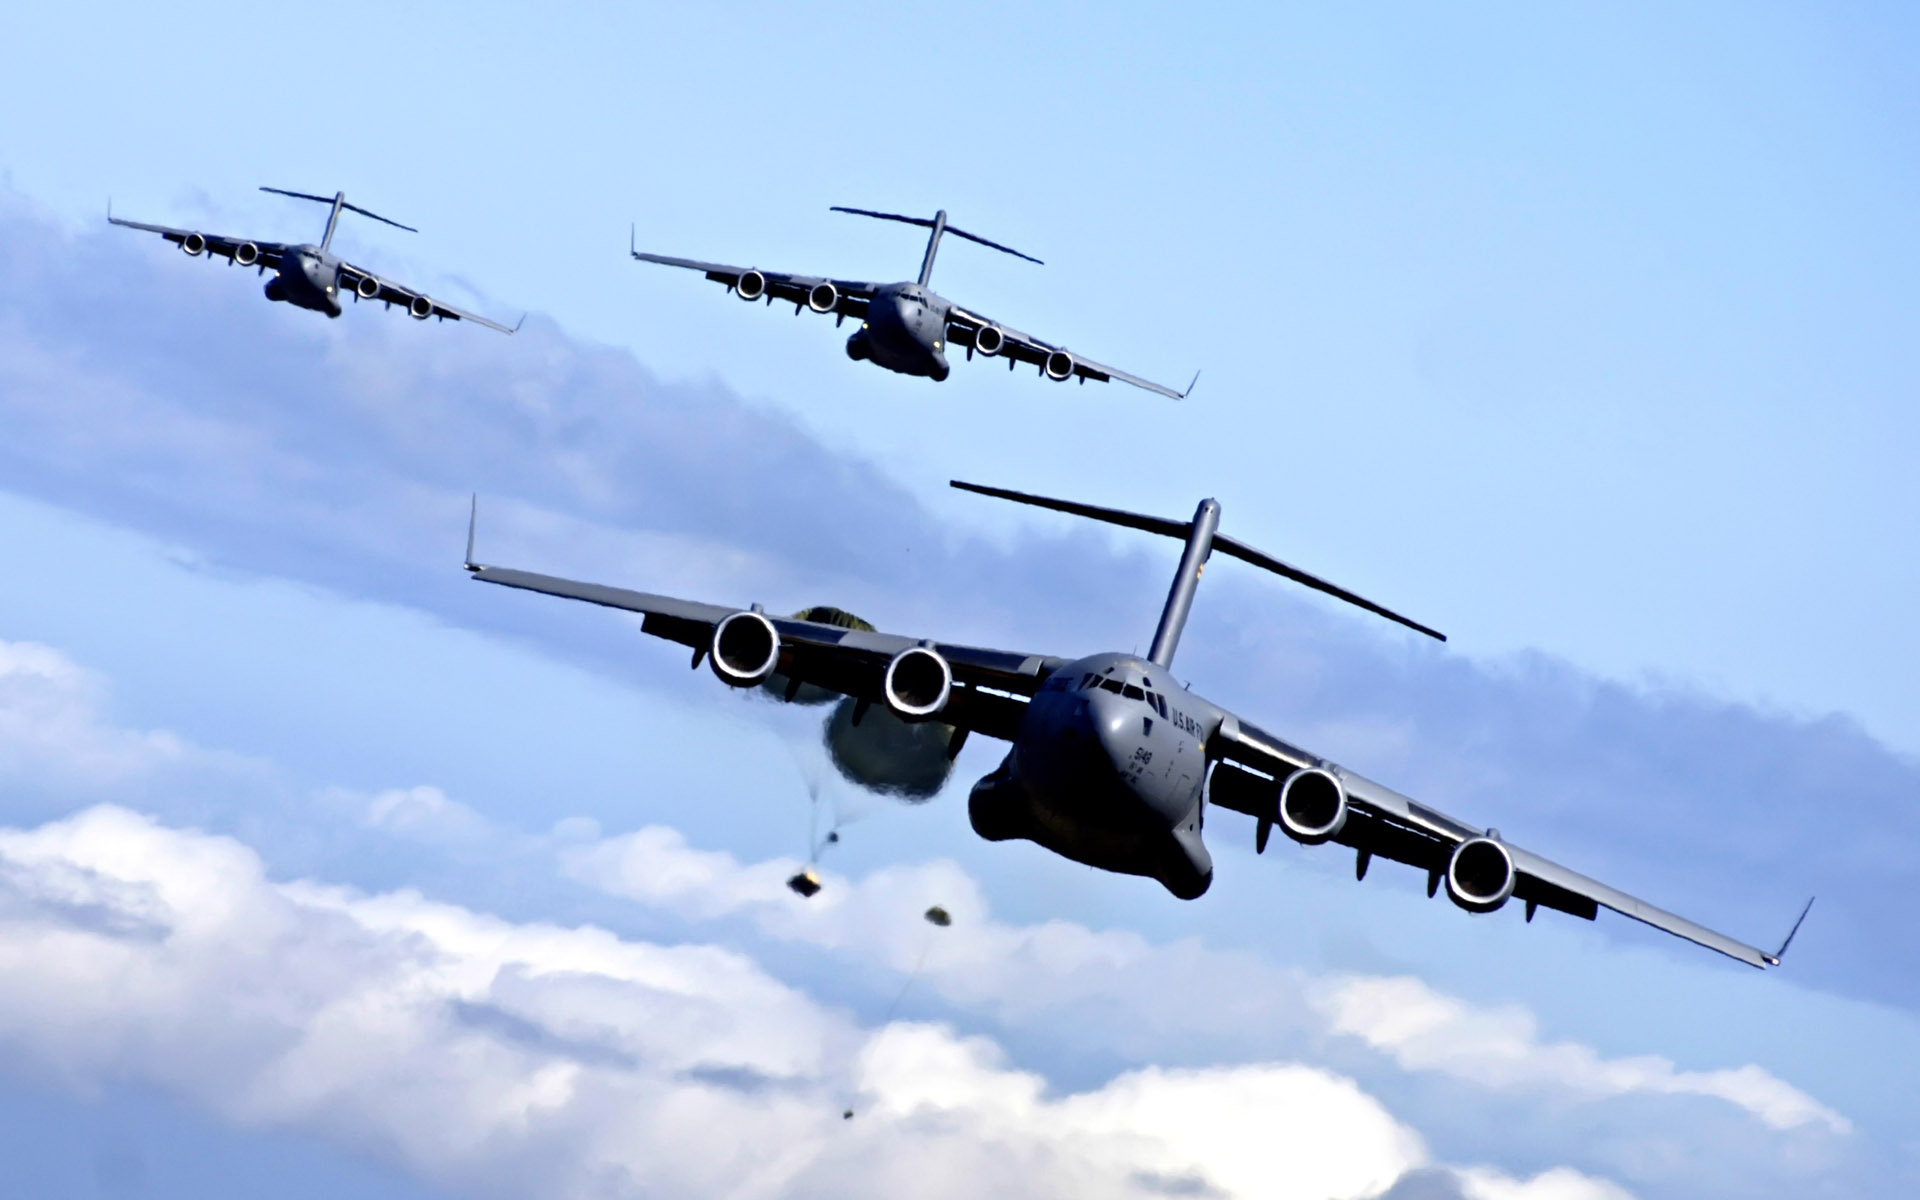 airplane wallpaper hd,aircraft,vehicle,airplane,military aircraft,aviation